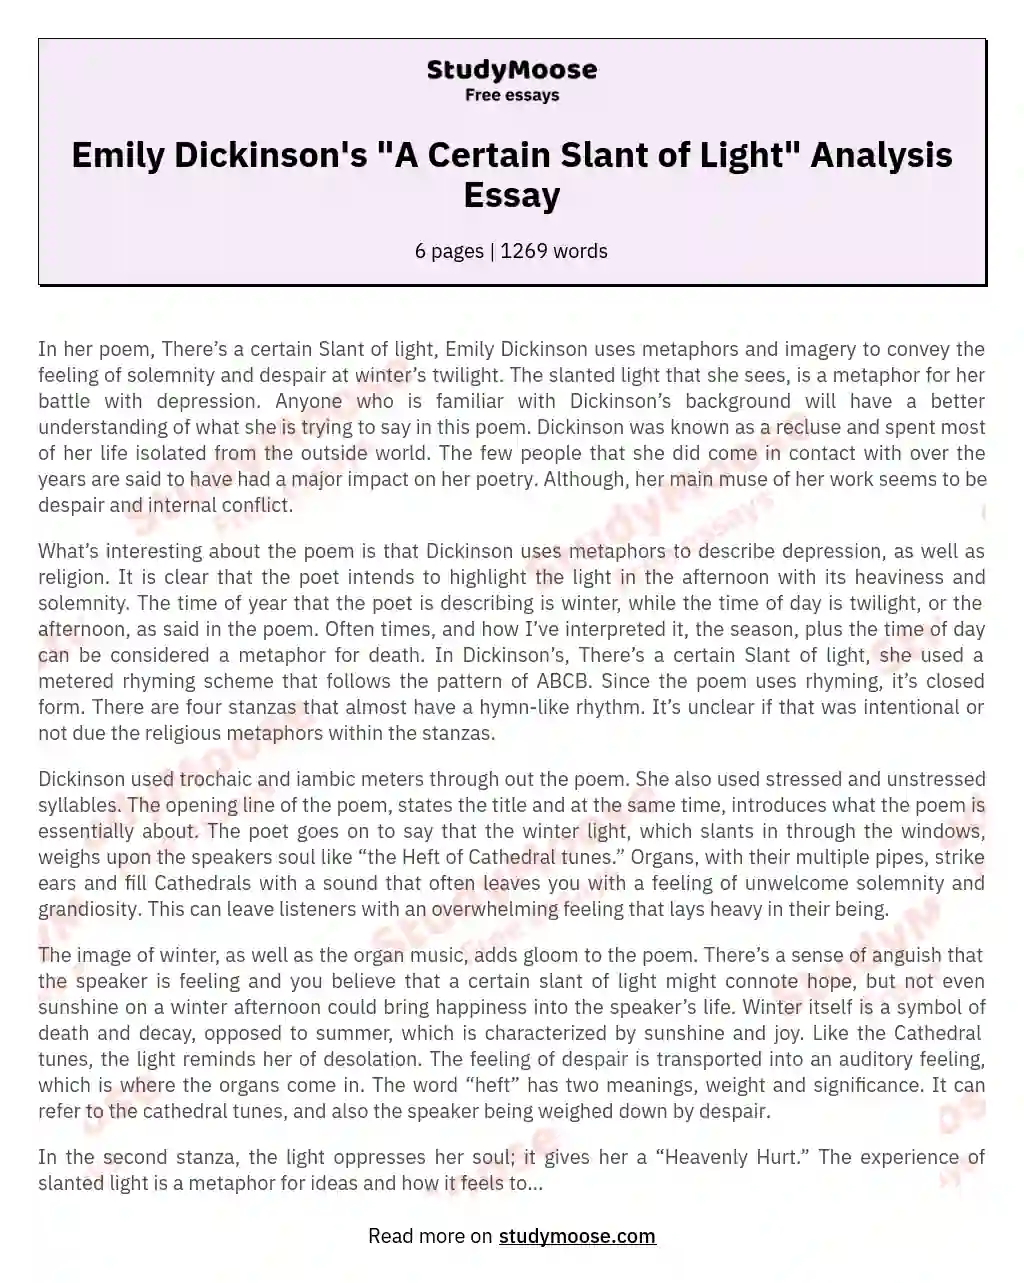 Emily Dickinson's "A Certain Slant of Light" Analysis Essay essay